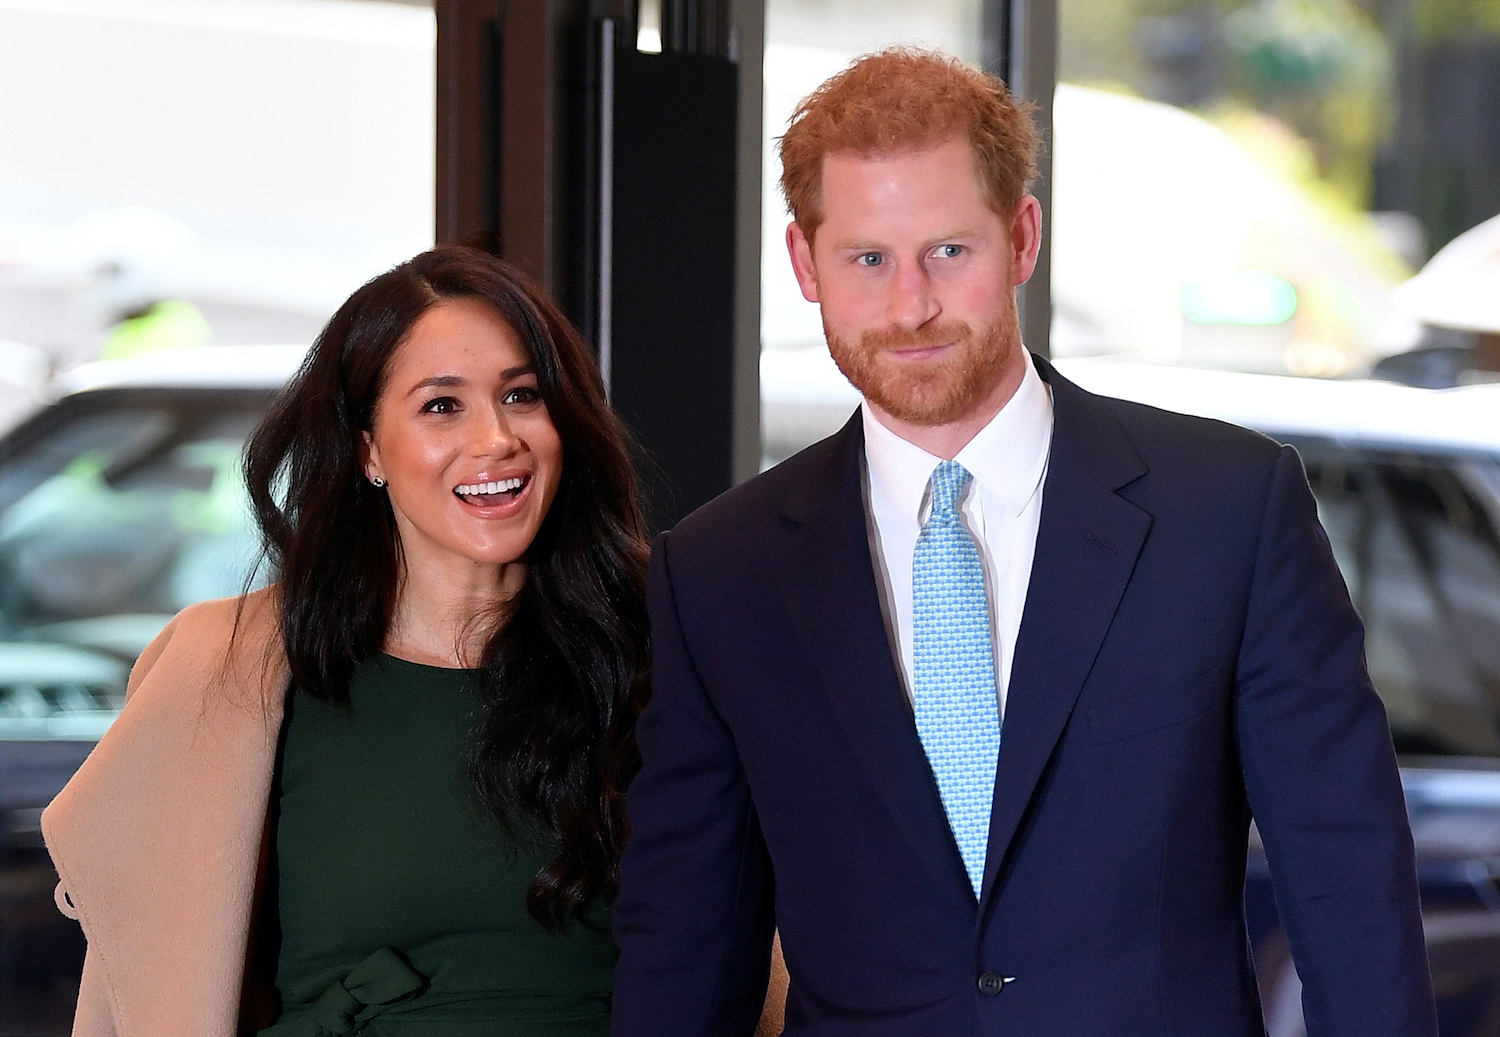 Meghan Markle smiles as Prince Harry looks on